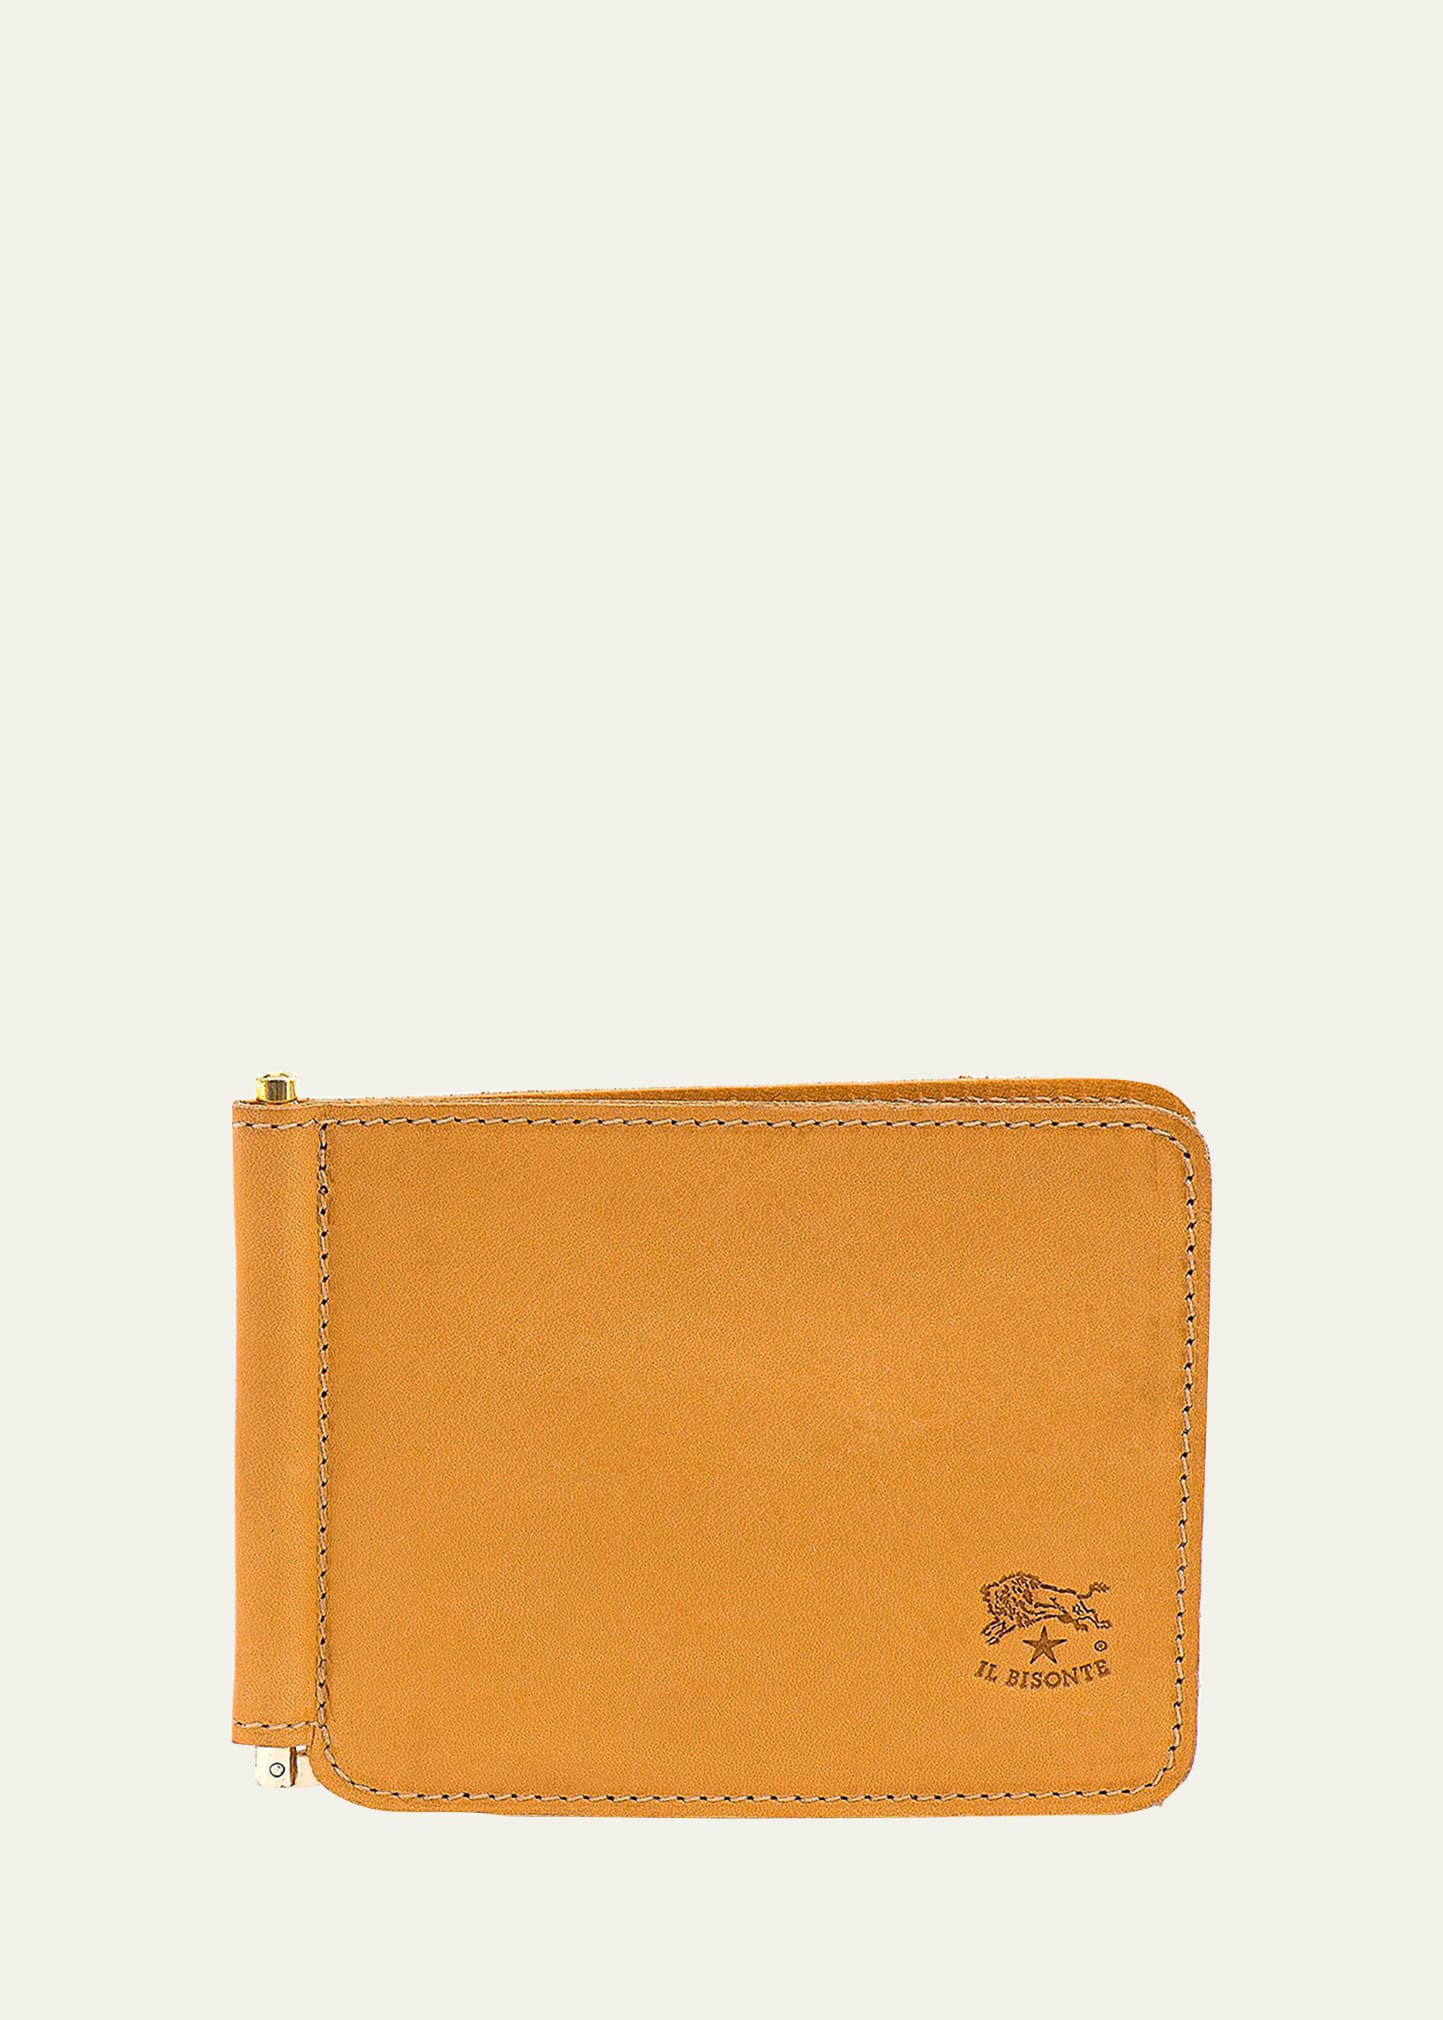 Men's Leather Bifold Wallet w/ Money Clip